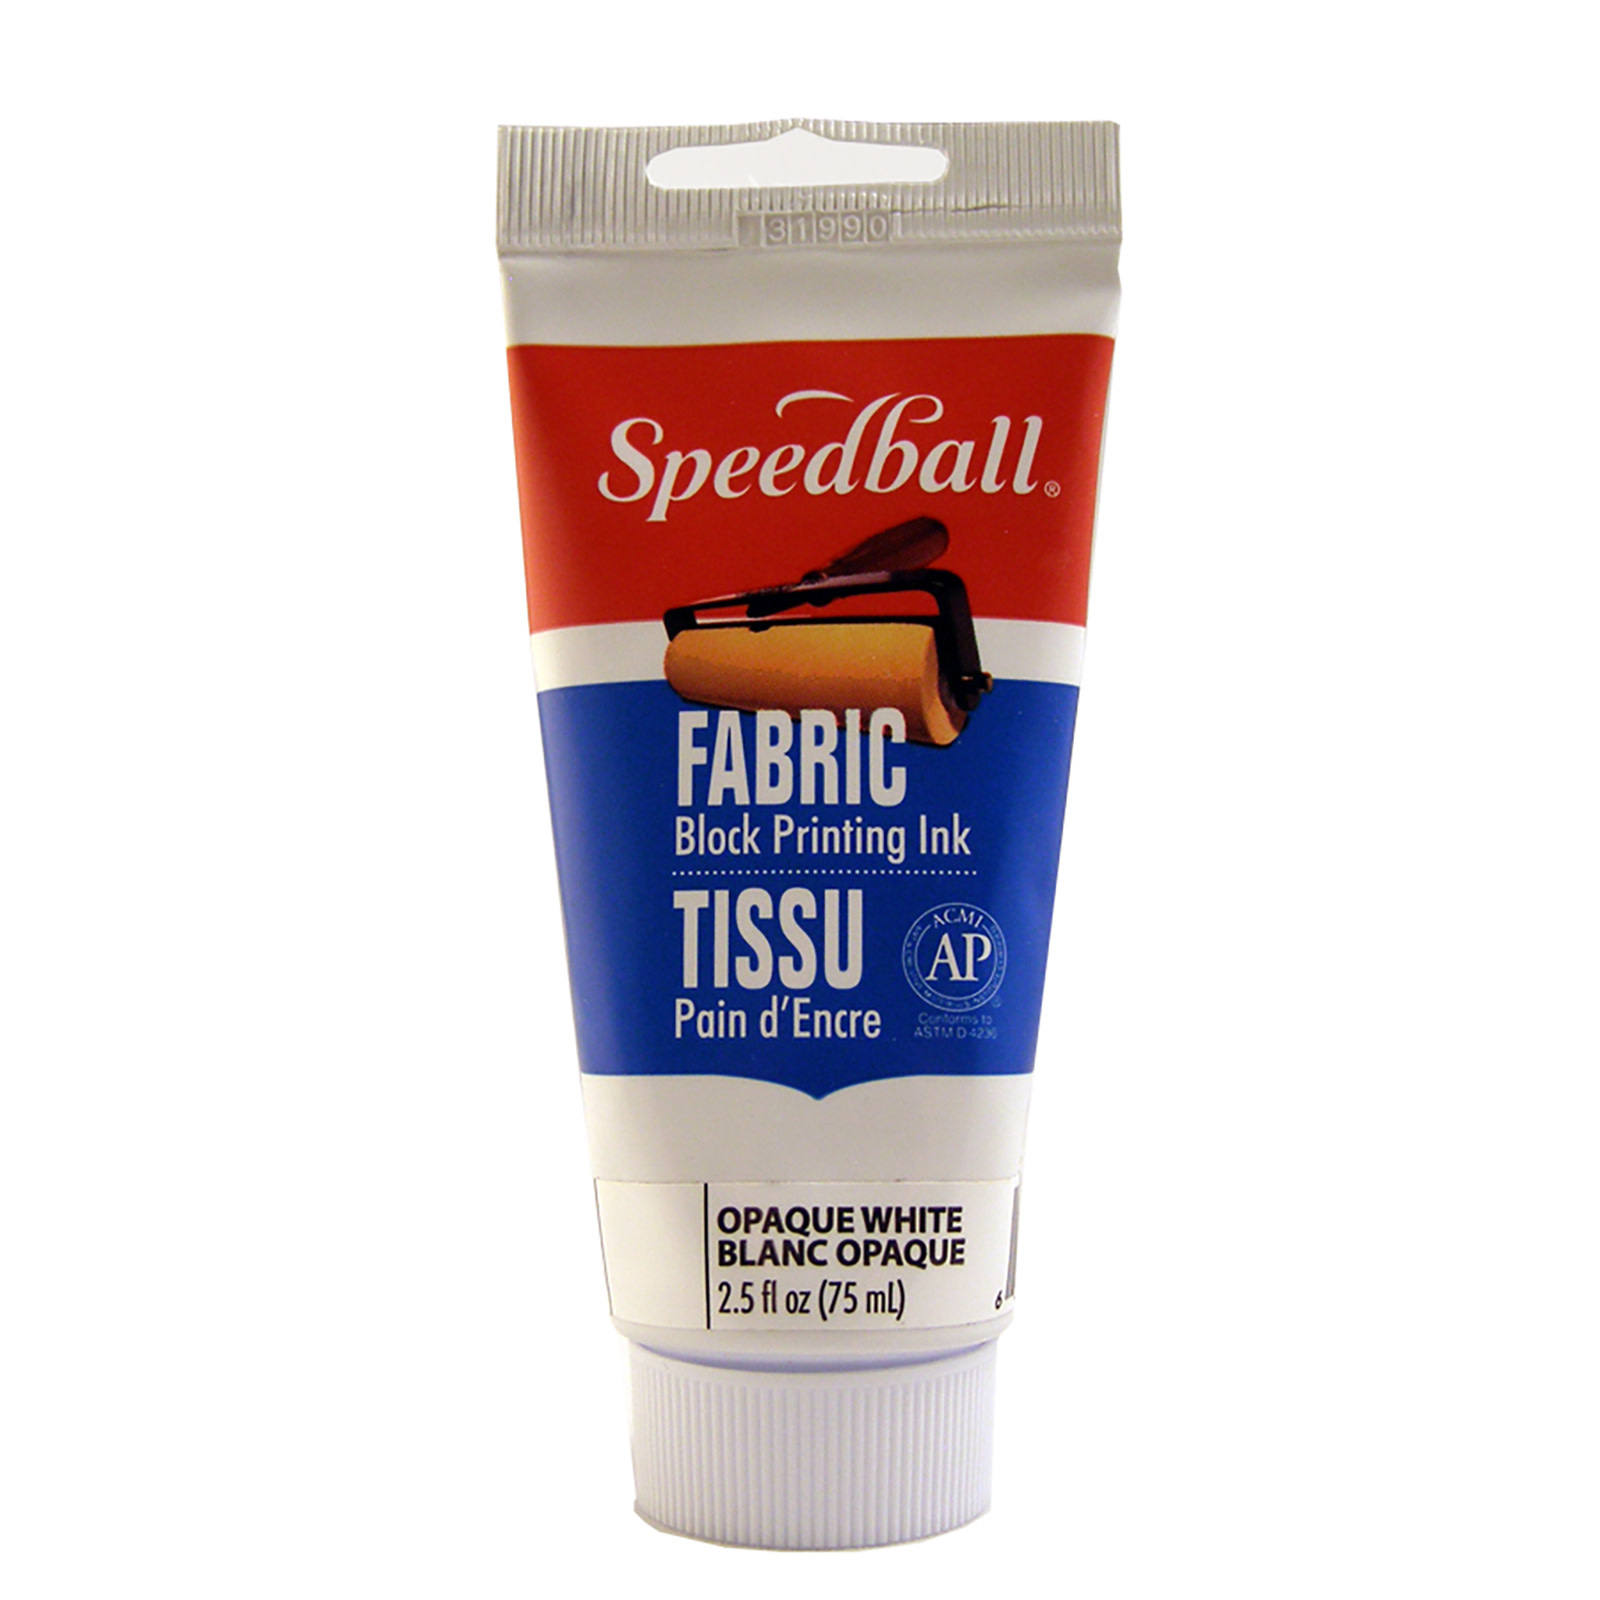 Speedball Printing Inks for Fabrics, 2.5 oz., Opaque White